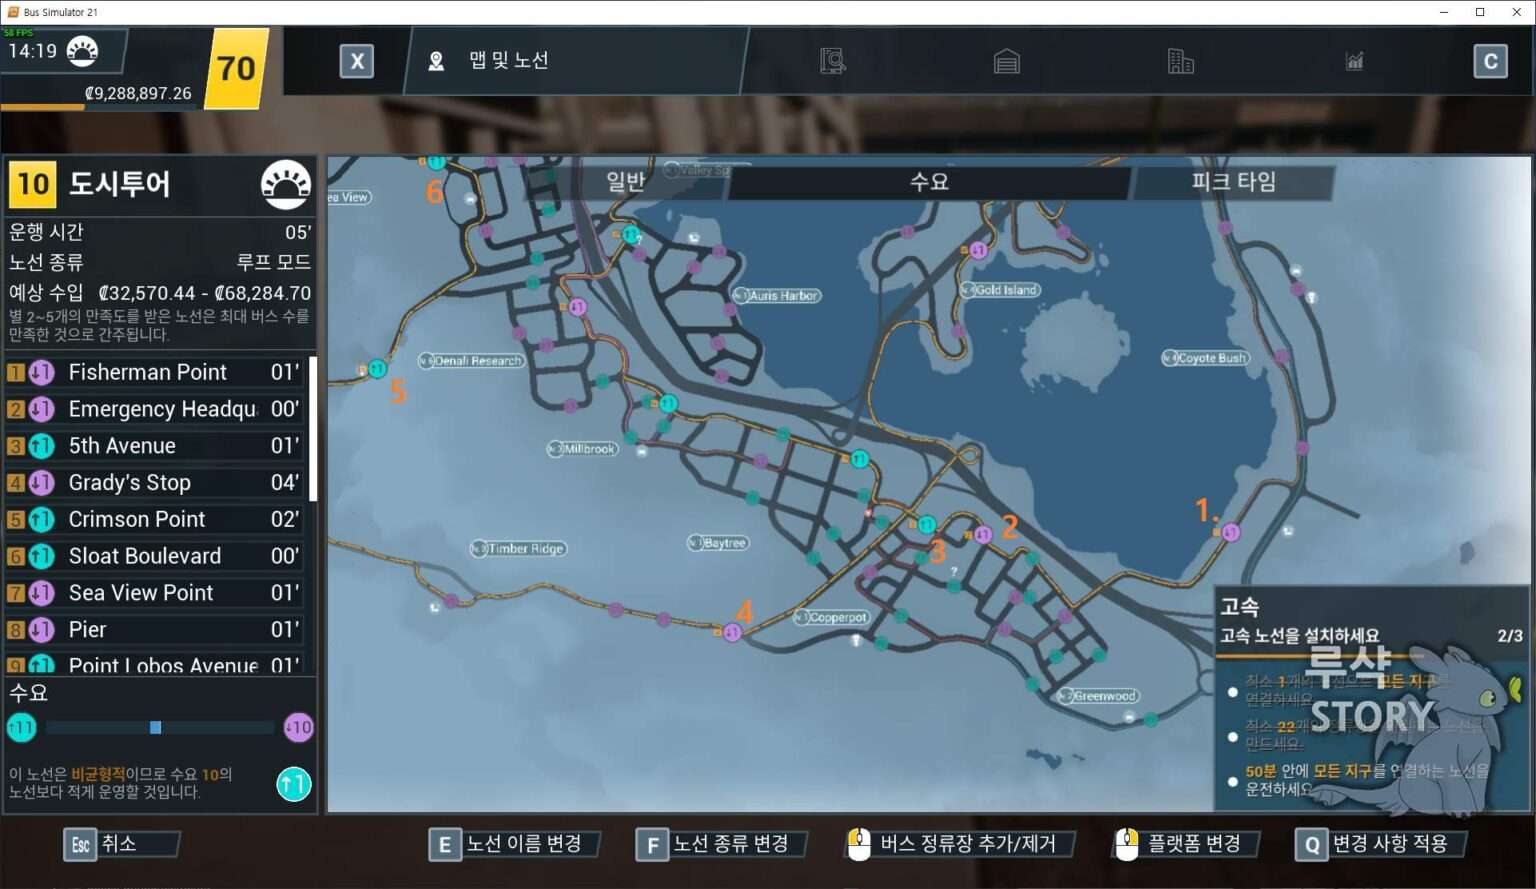 travel map simulator